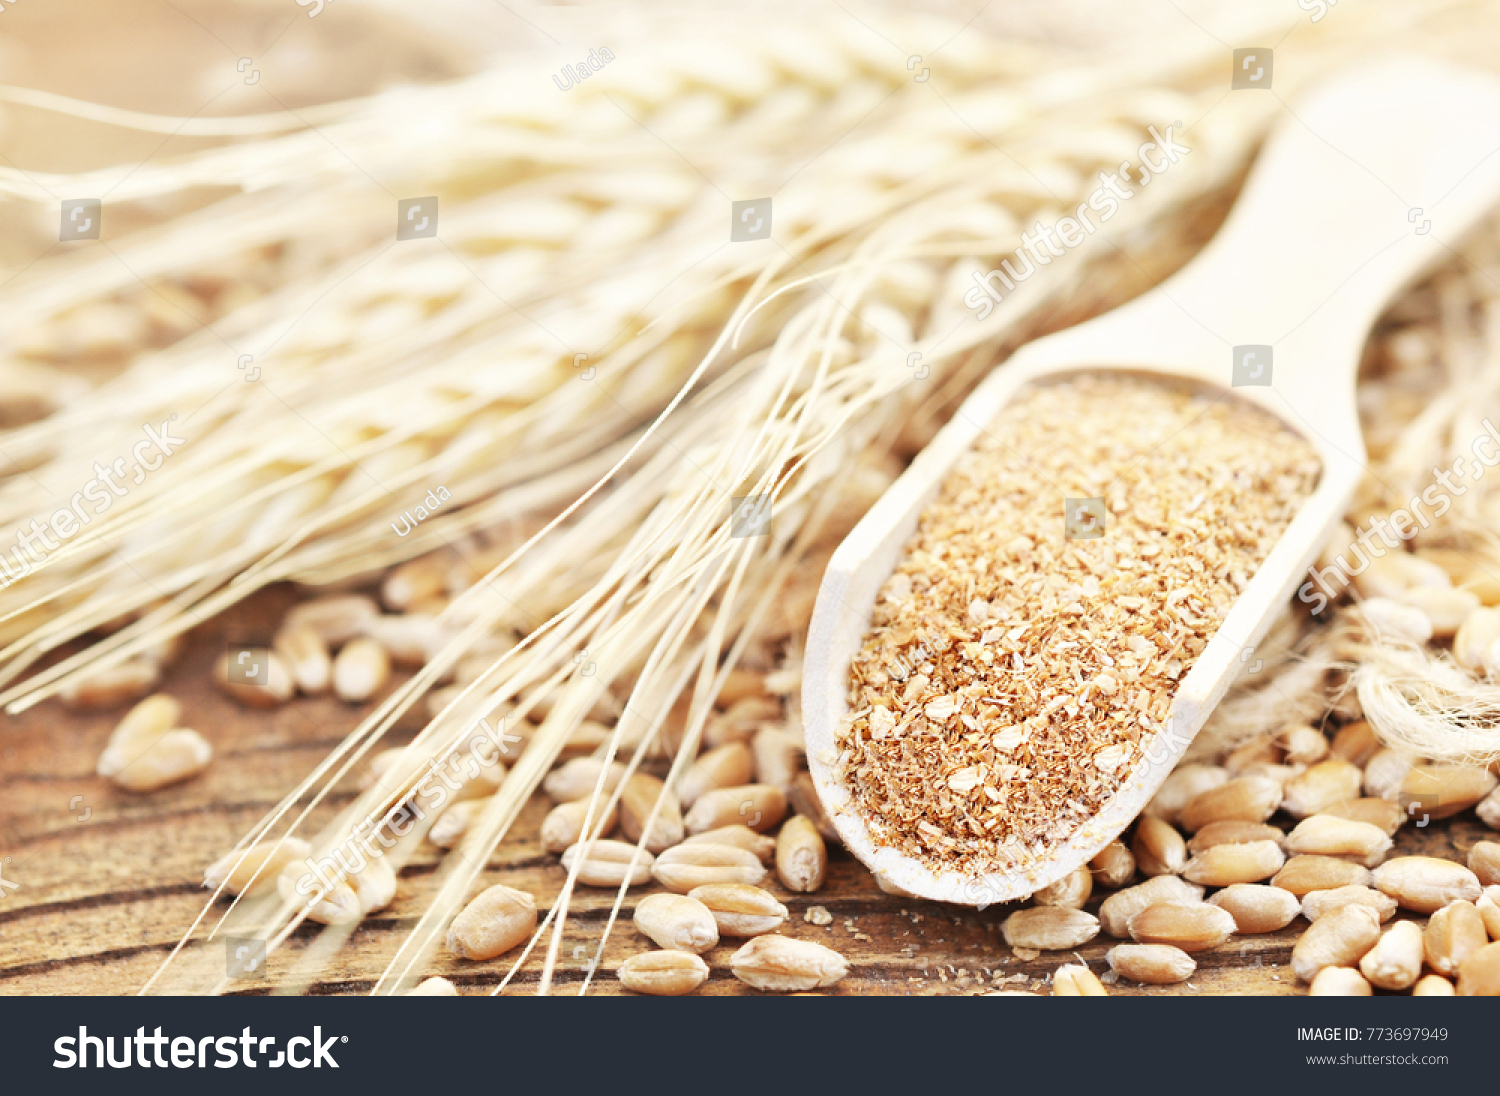 Wheat bran in wooden spoon on wheat ears plants background, unprocessed miller's bran, selective focus #773697949